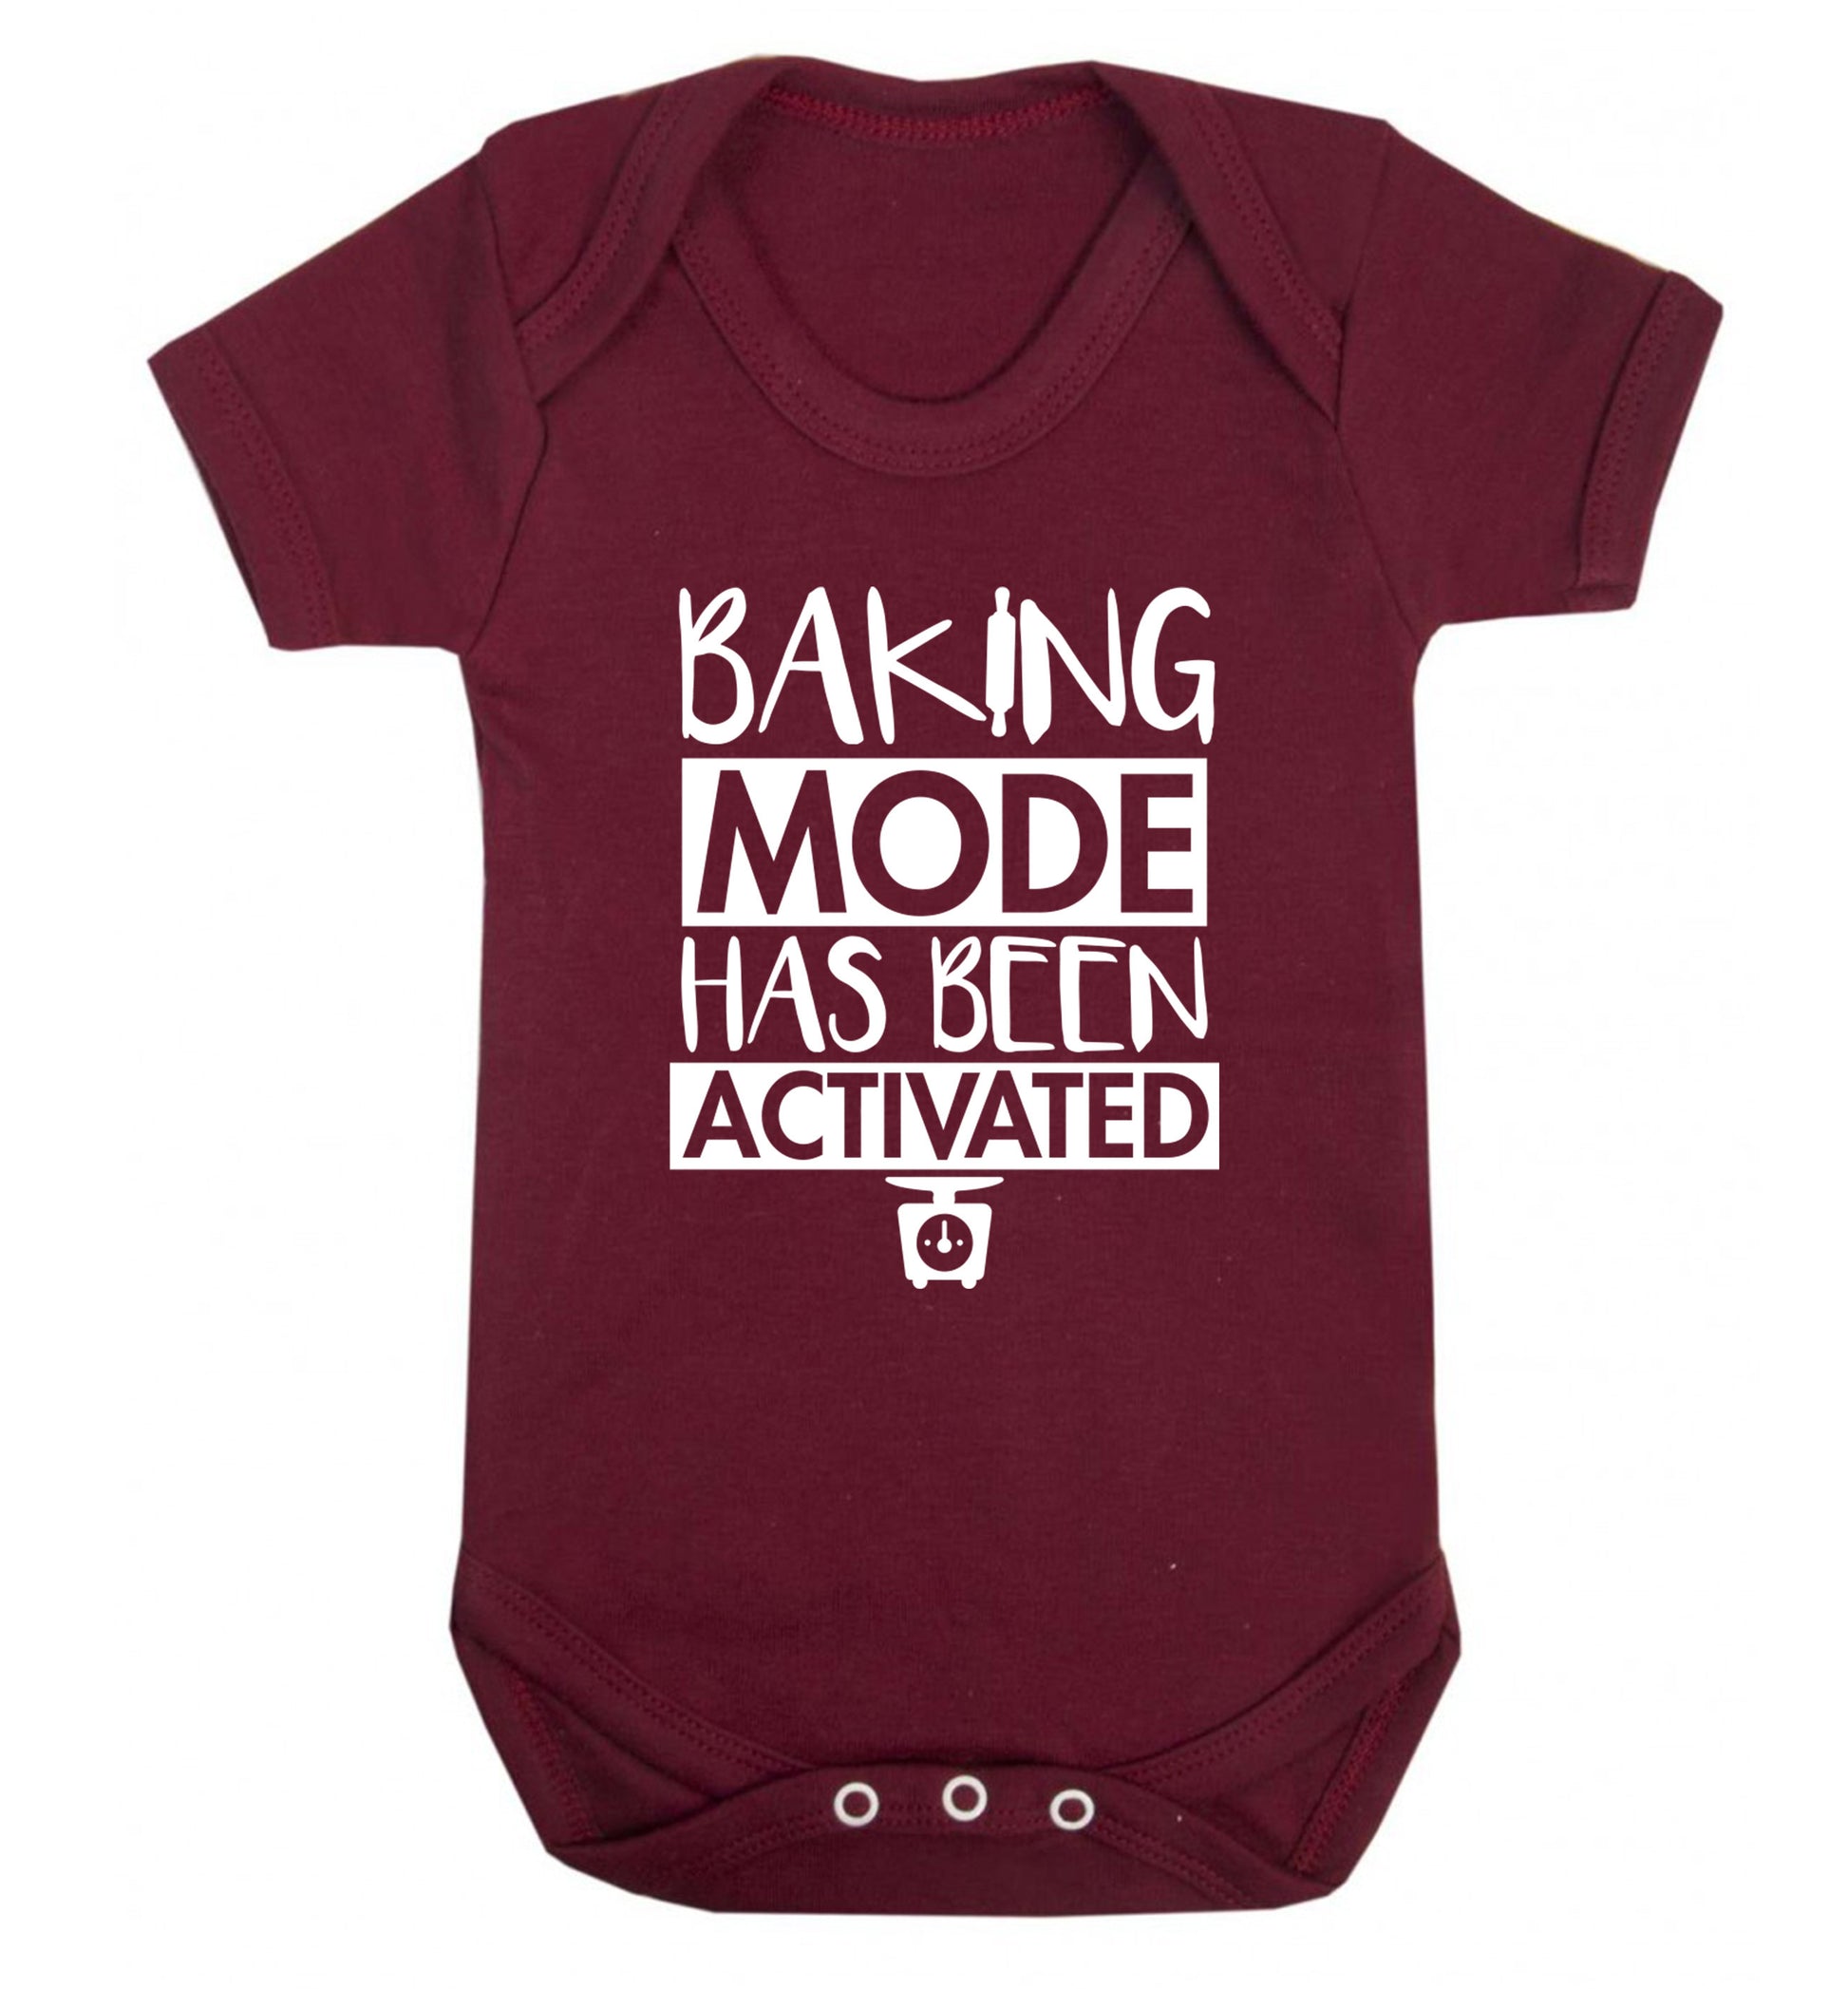 Baking mode has been activated Baby Vest maroon 18-24 months